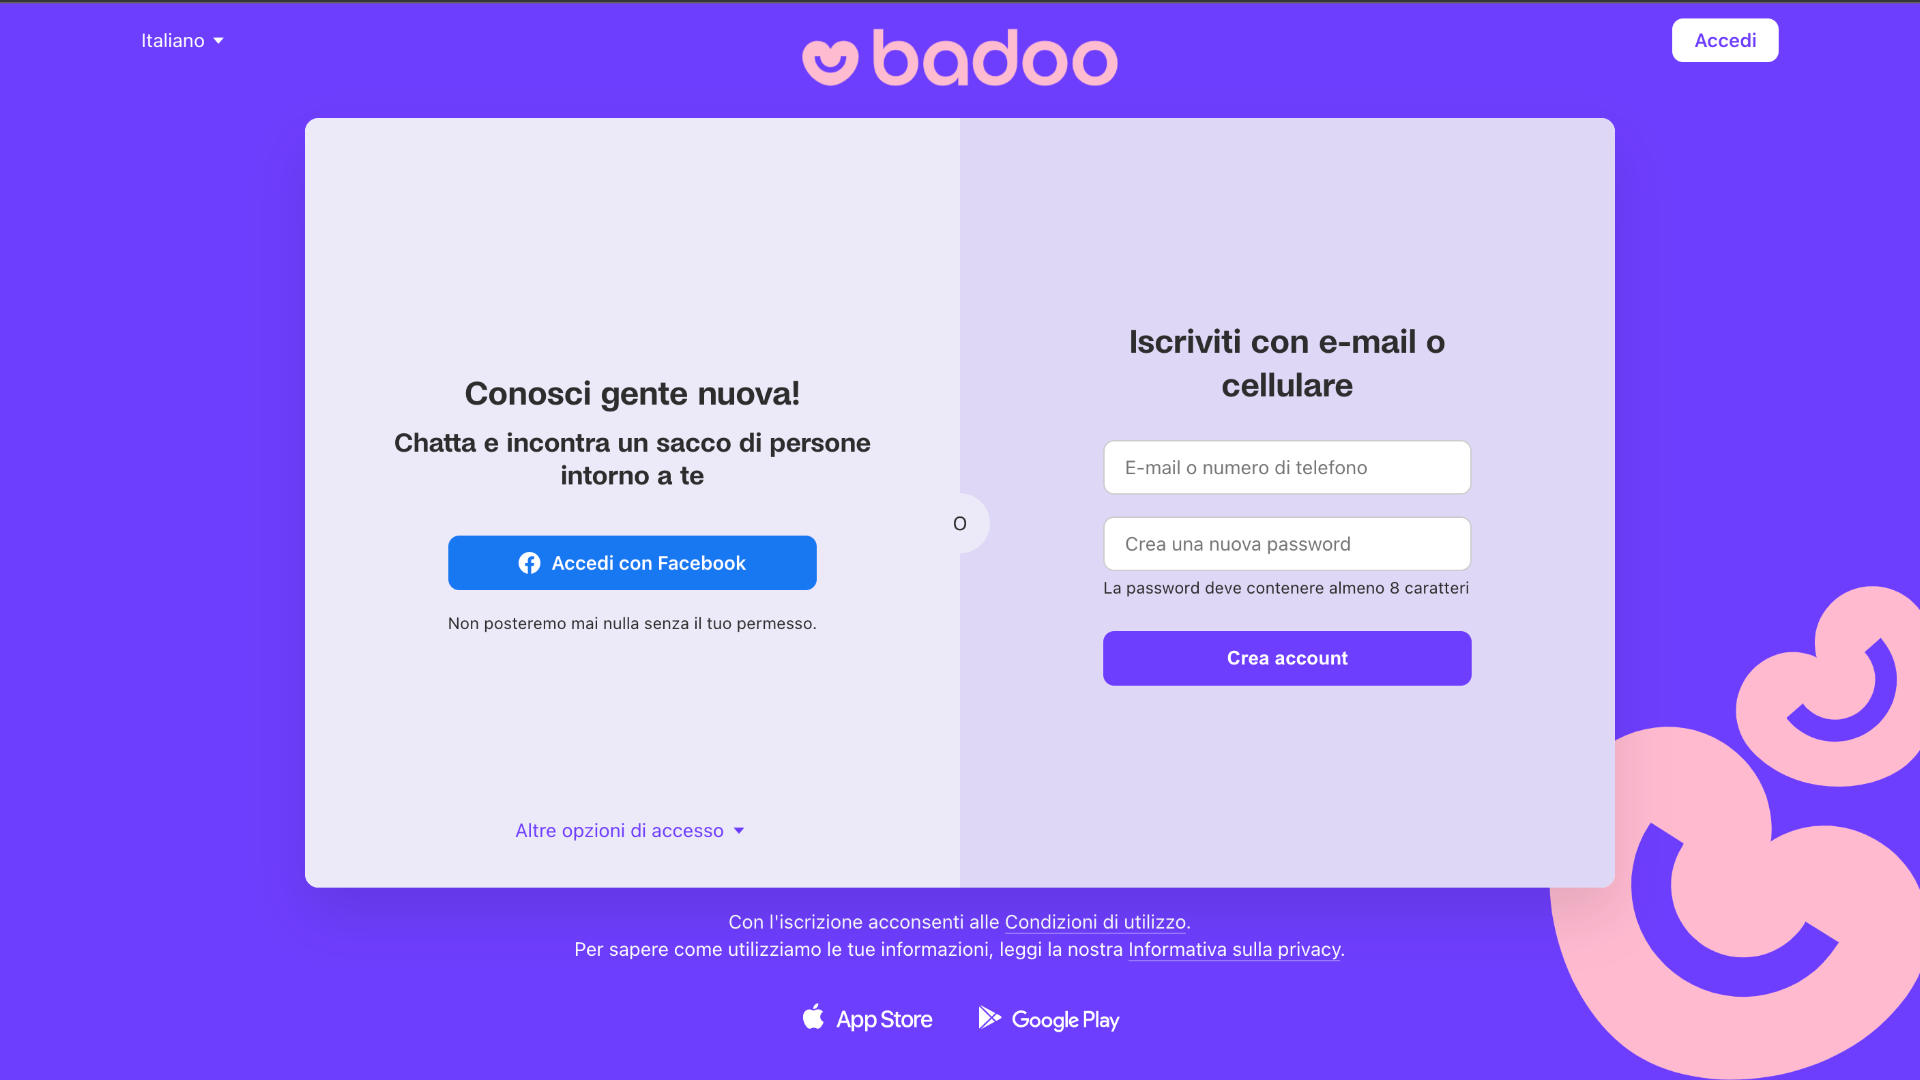 Badoo home page